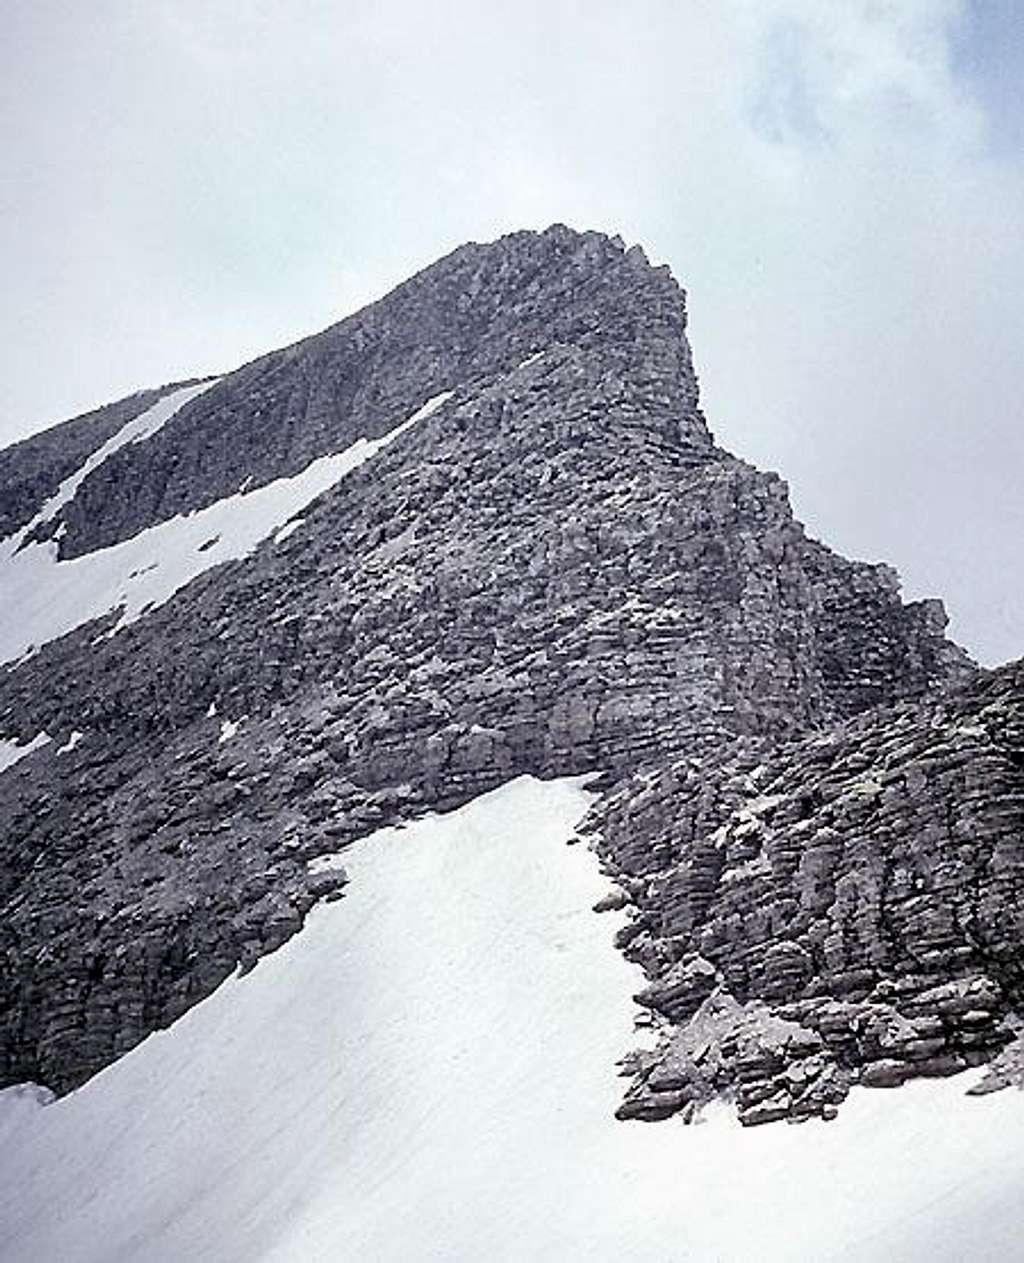 Northwest Ridge of Reeti